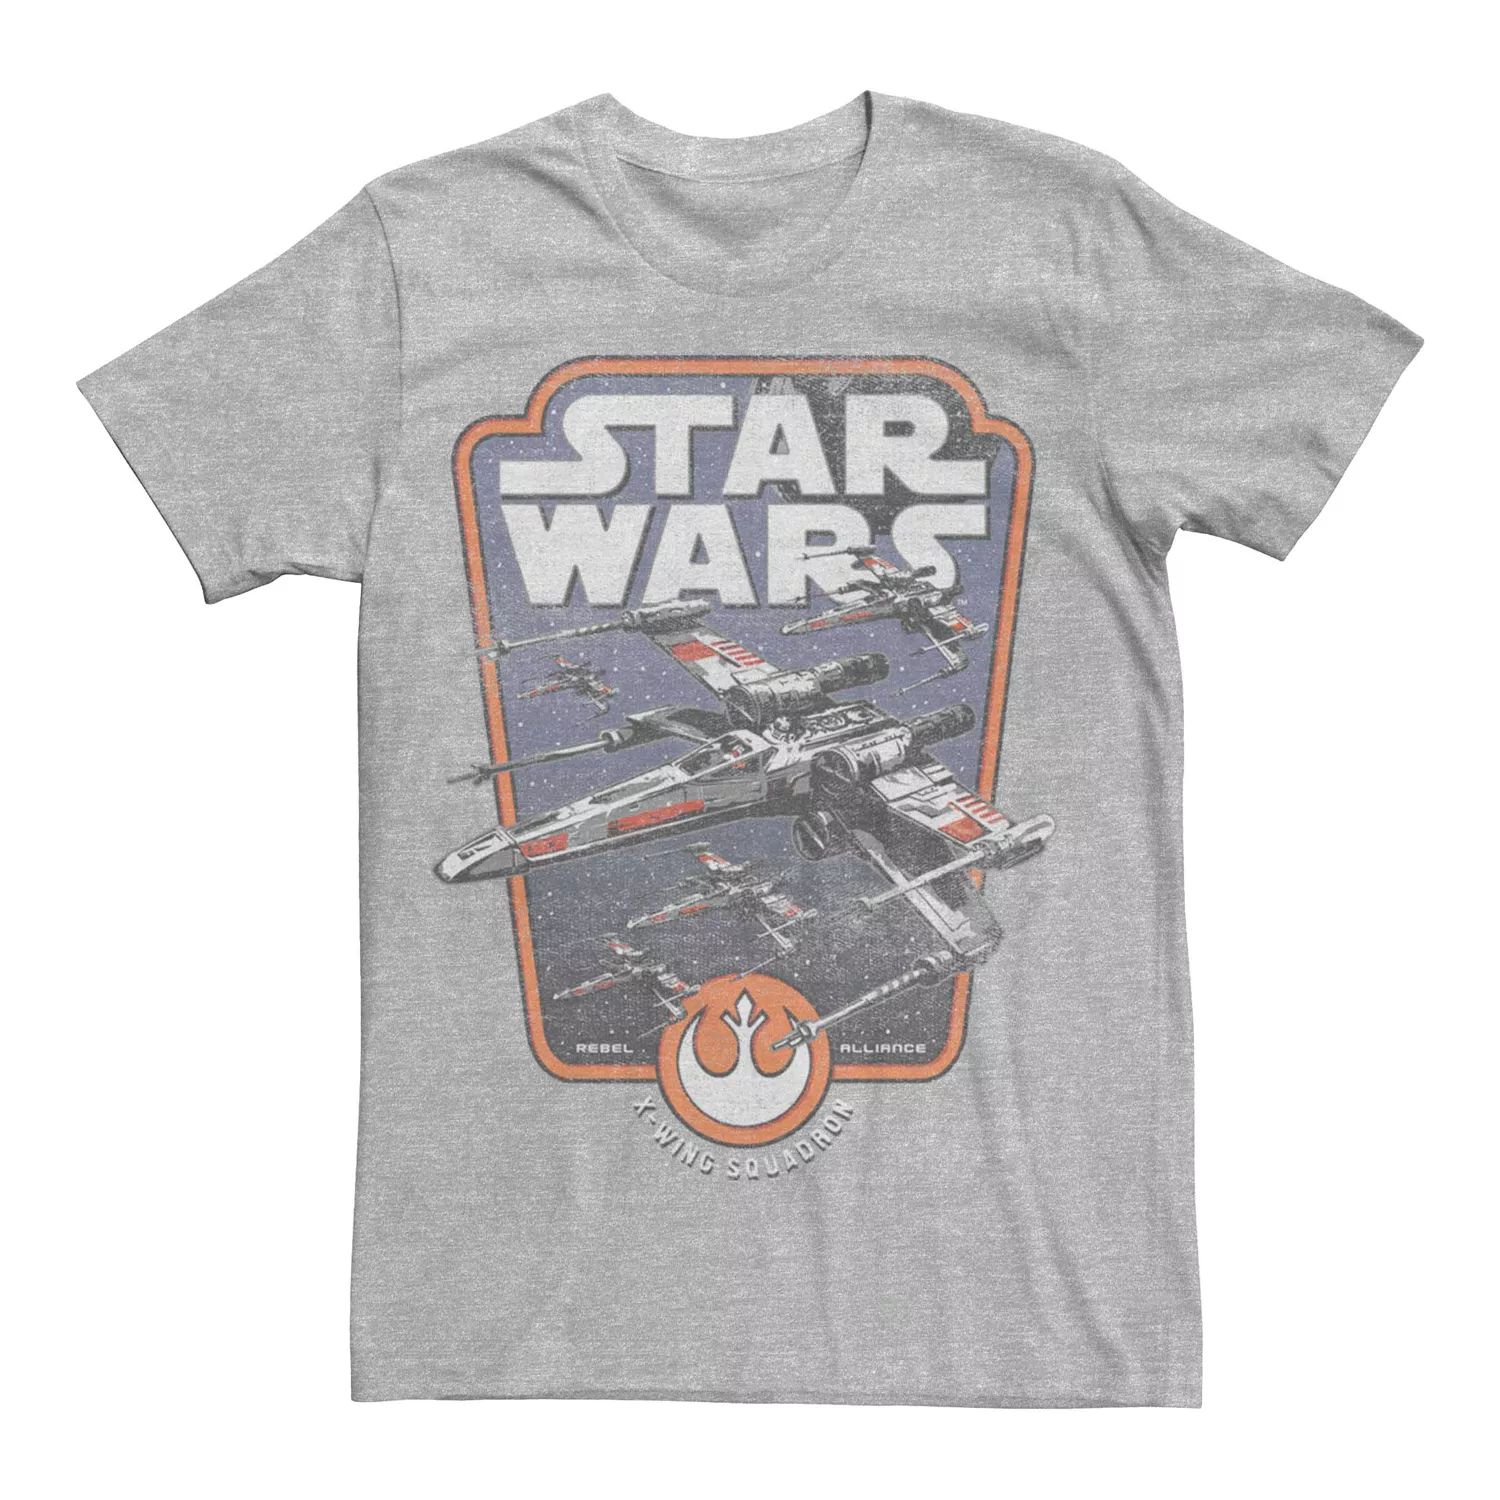 Мужская винтажная футболка с графическим рисунком Star Wars X-Wing Squadron Licensed Character мужская футболка star wars x wing blueprint licensed character